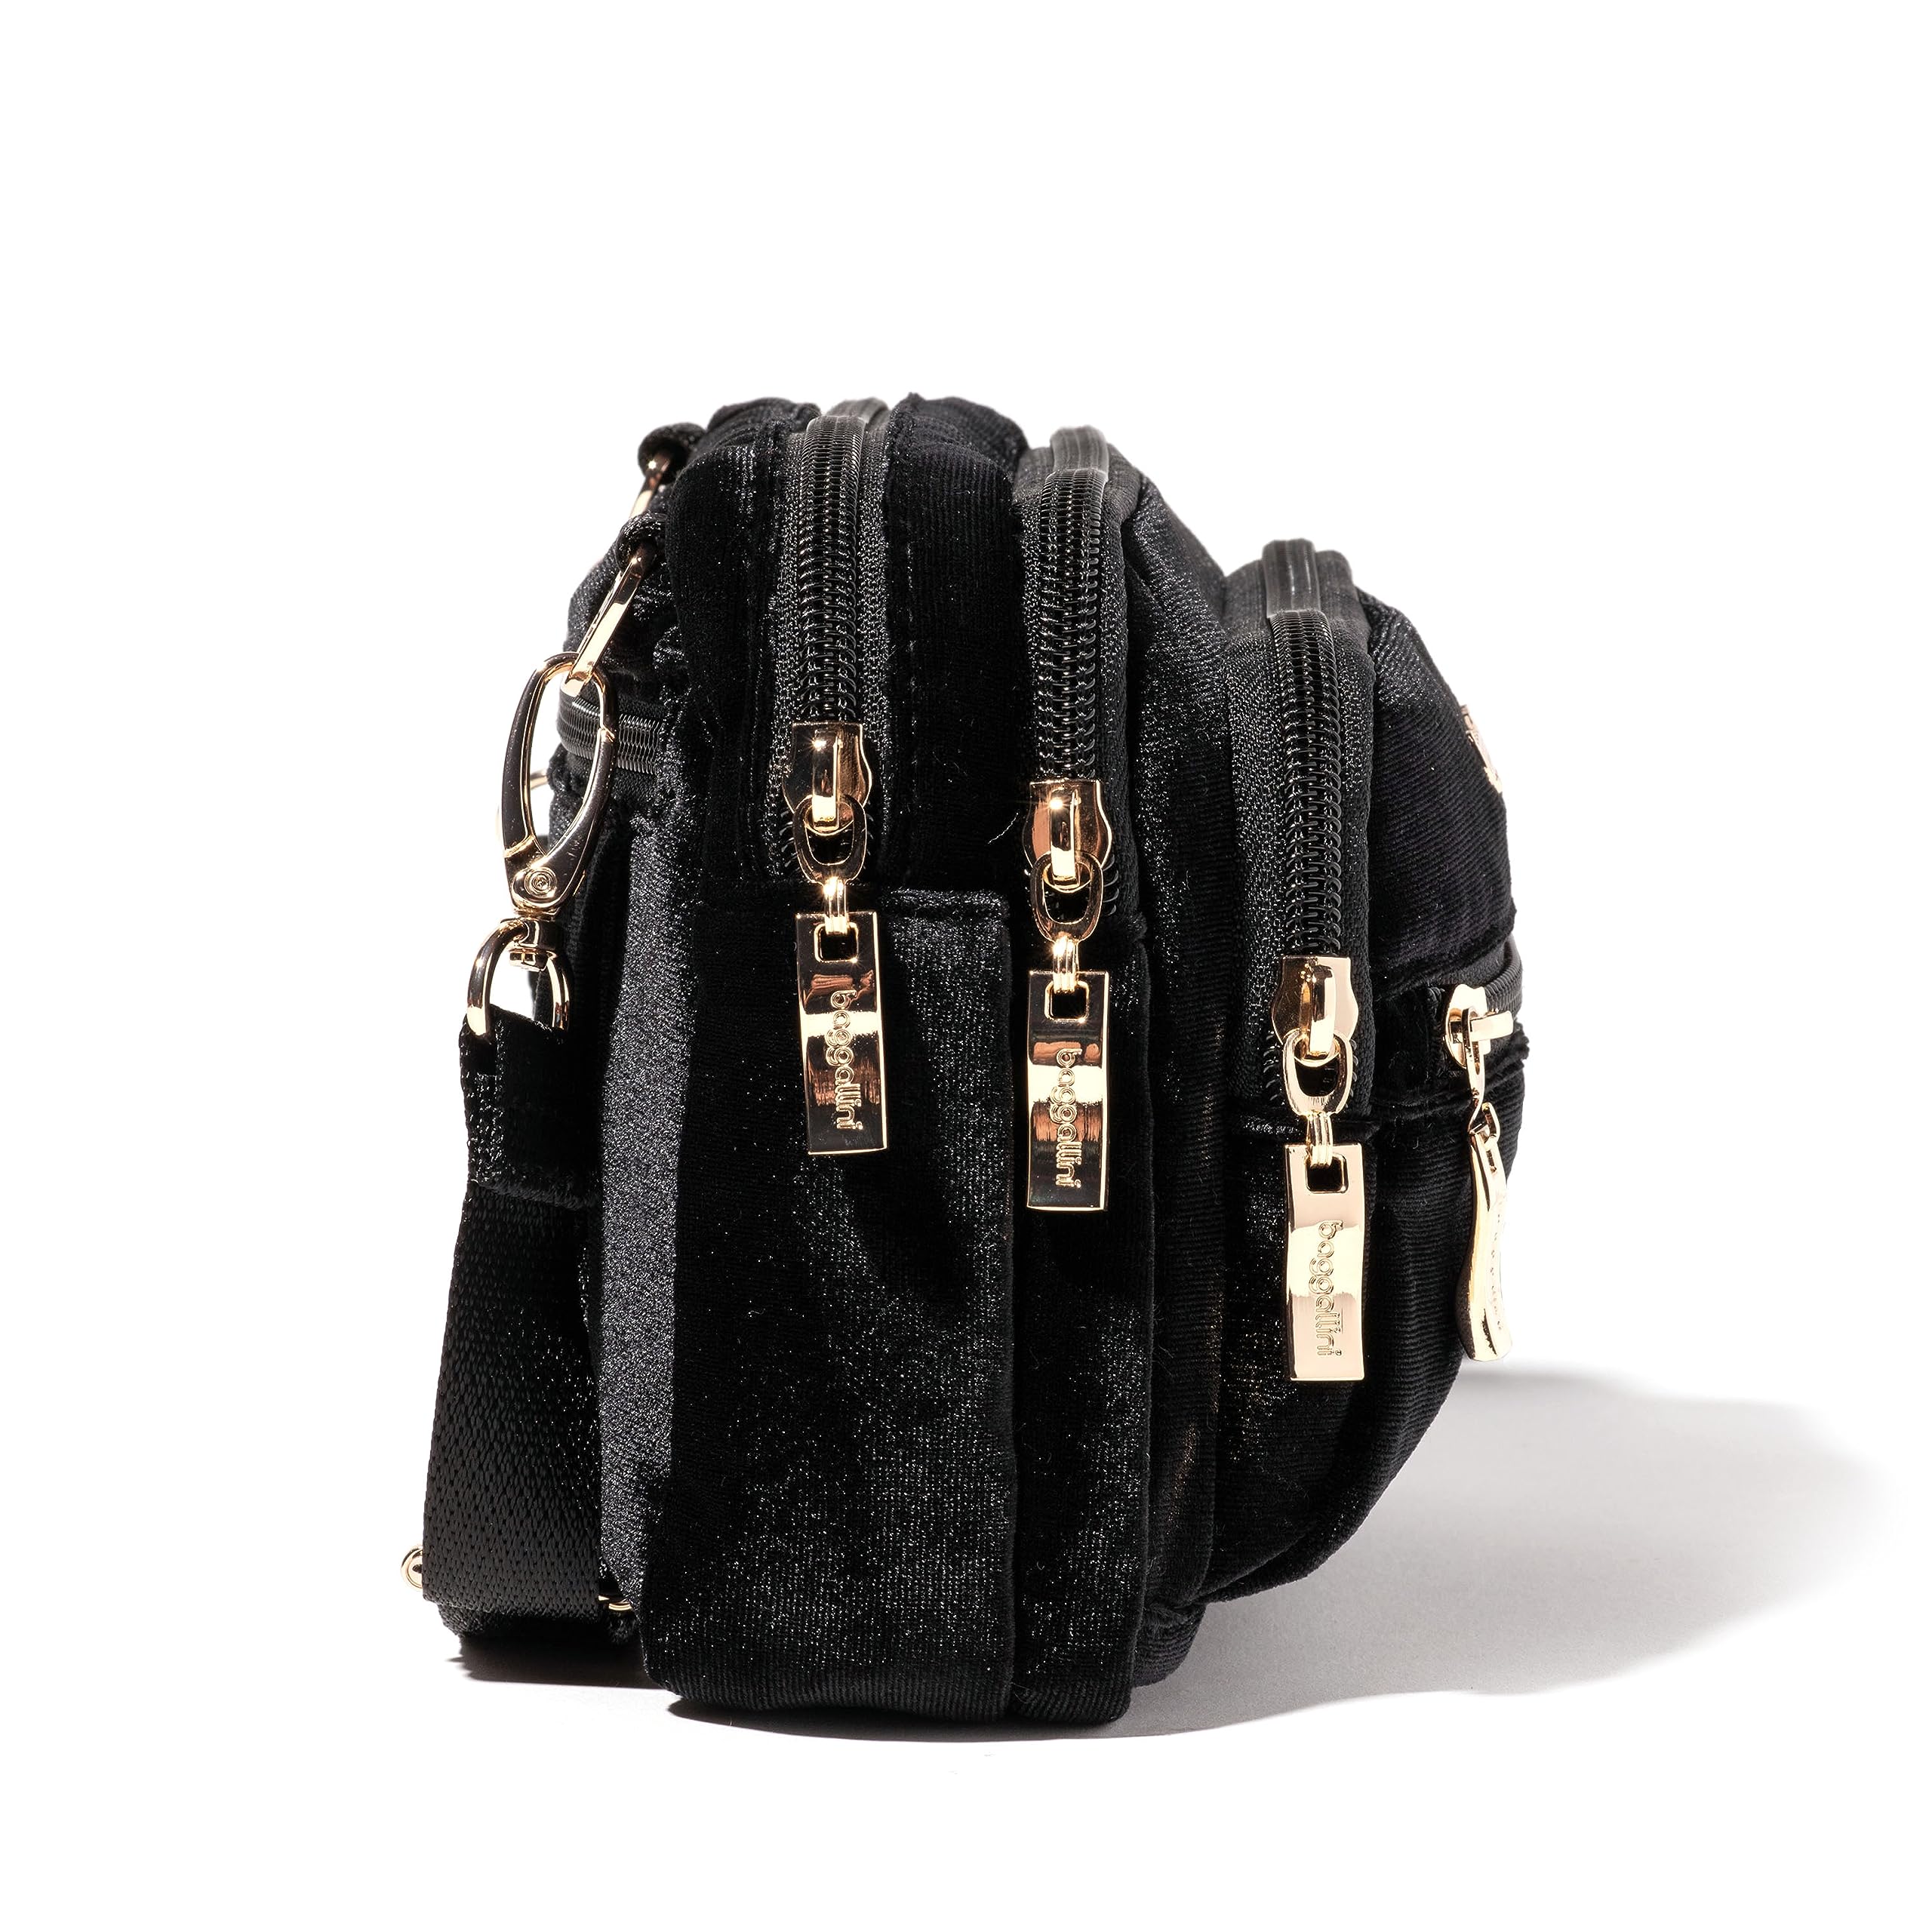 Baggallini Triple Zip Small Crossbody Bag for Women - Convertible Crossbody Fanny Pack Belt Bag - Lightweight Water-resistant